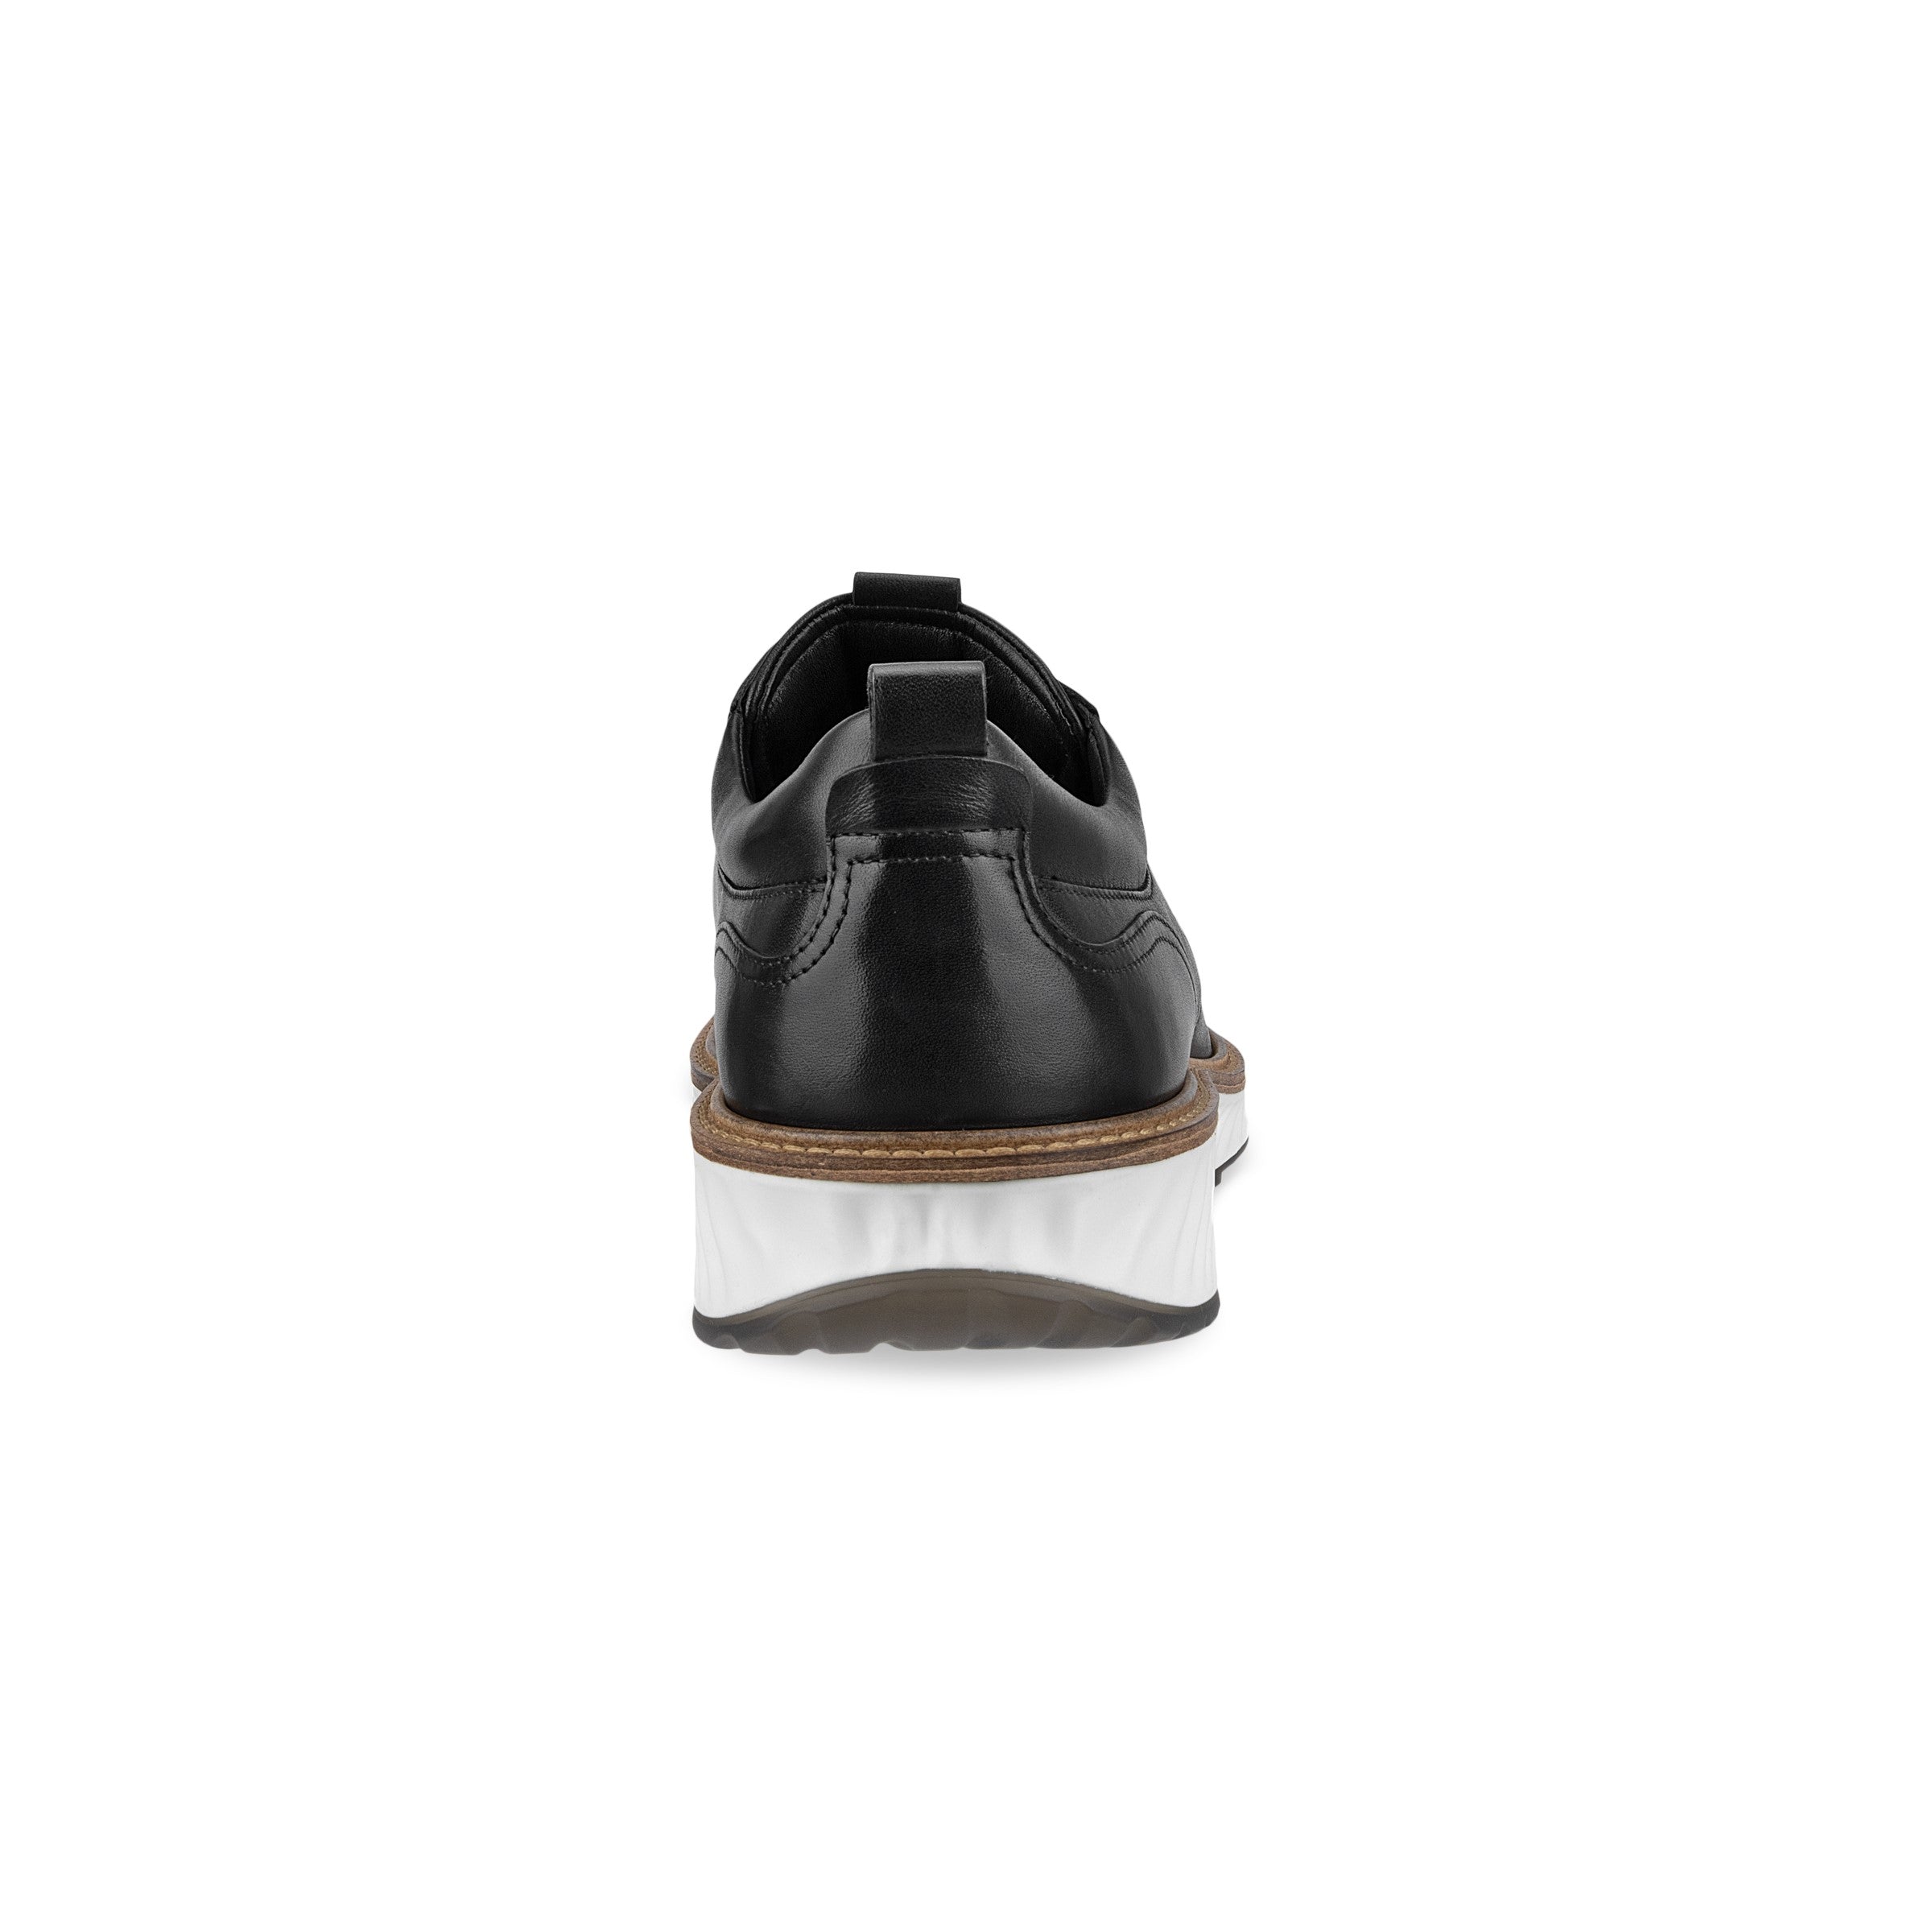 Men's Ecco St.1 Hybrid Derby Shoe Color: Black